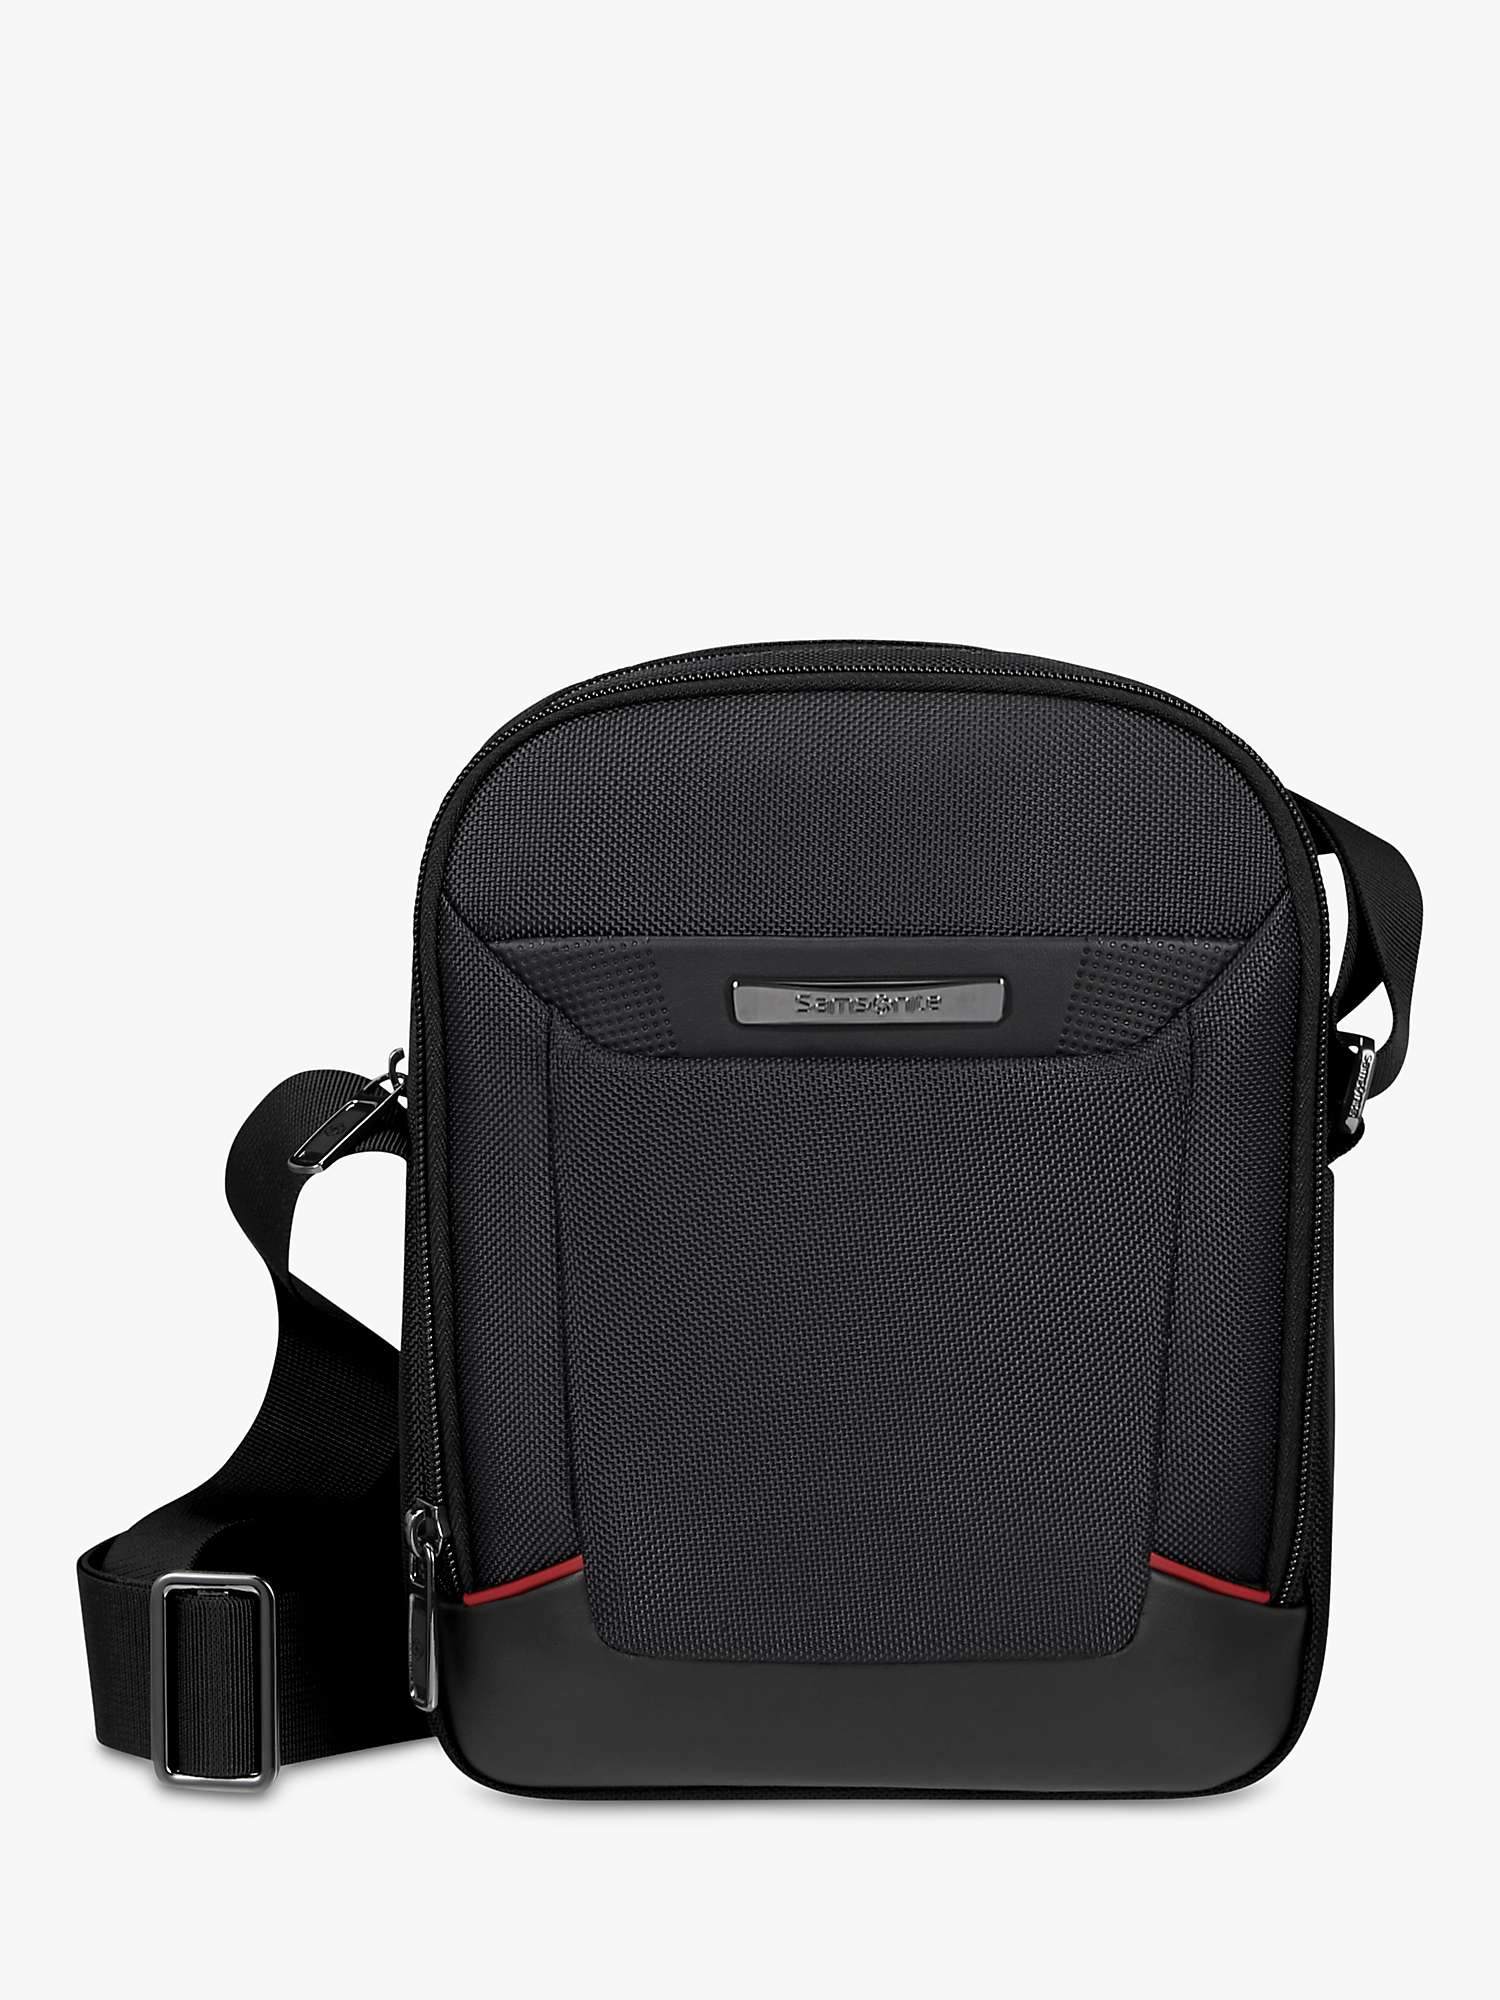 Buy Samsonite Pro-DLX 6 Crossbody Bag Online at johnlewis.com